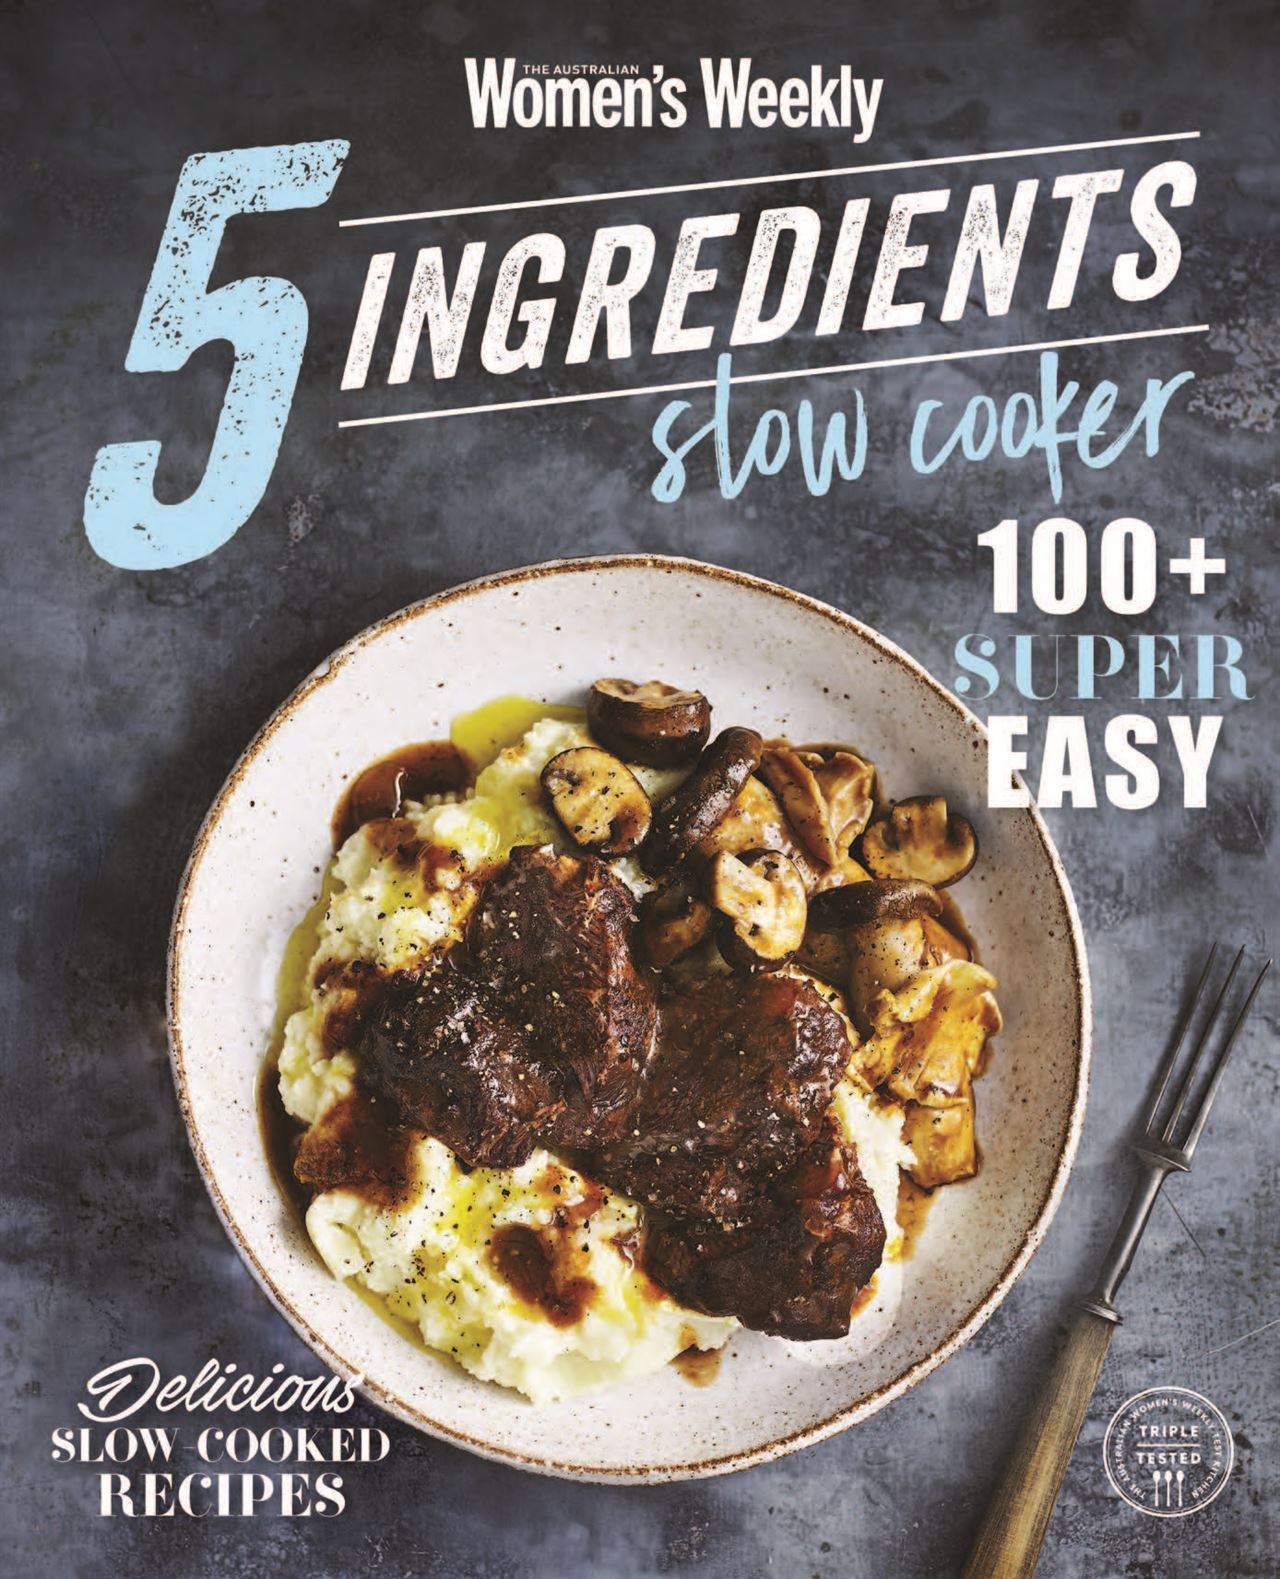 The Australian Women's Weekly 5 Ingredients Slow Cooker